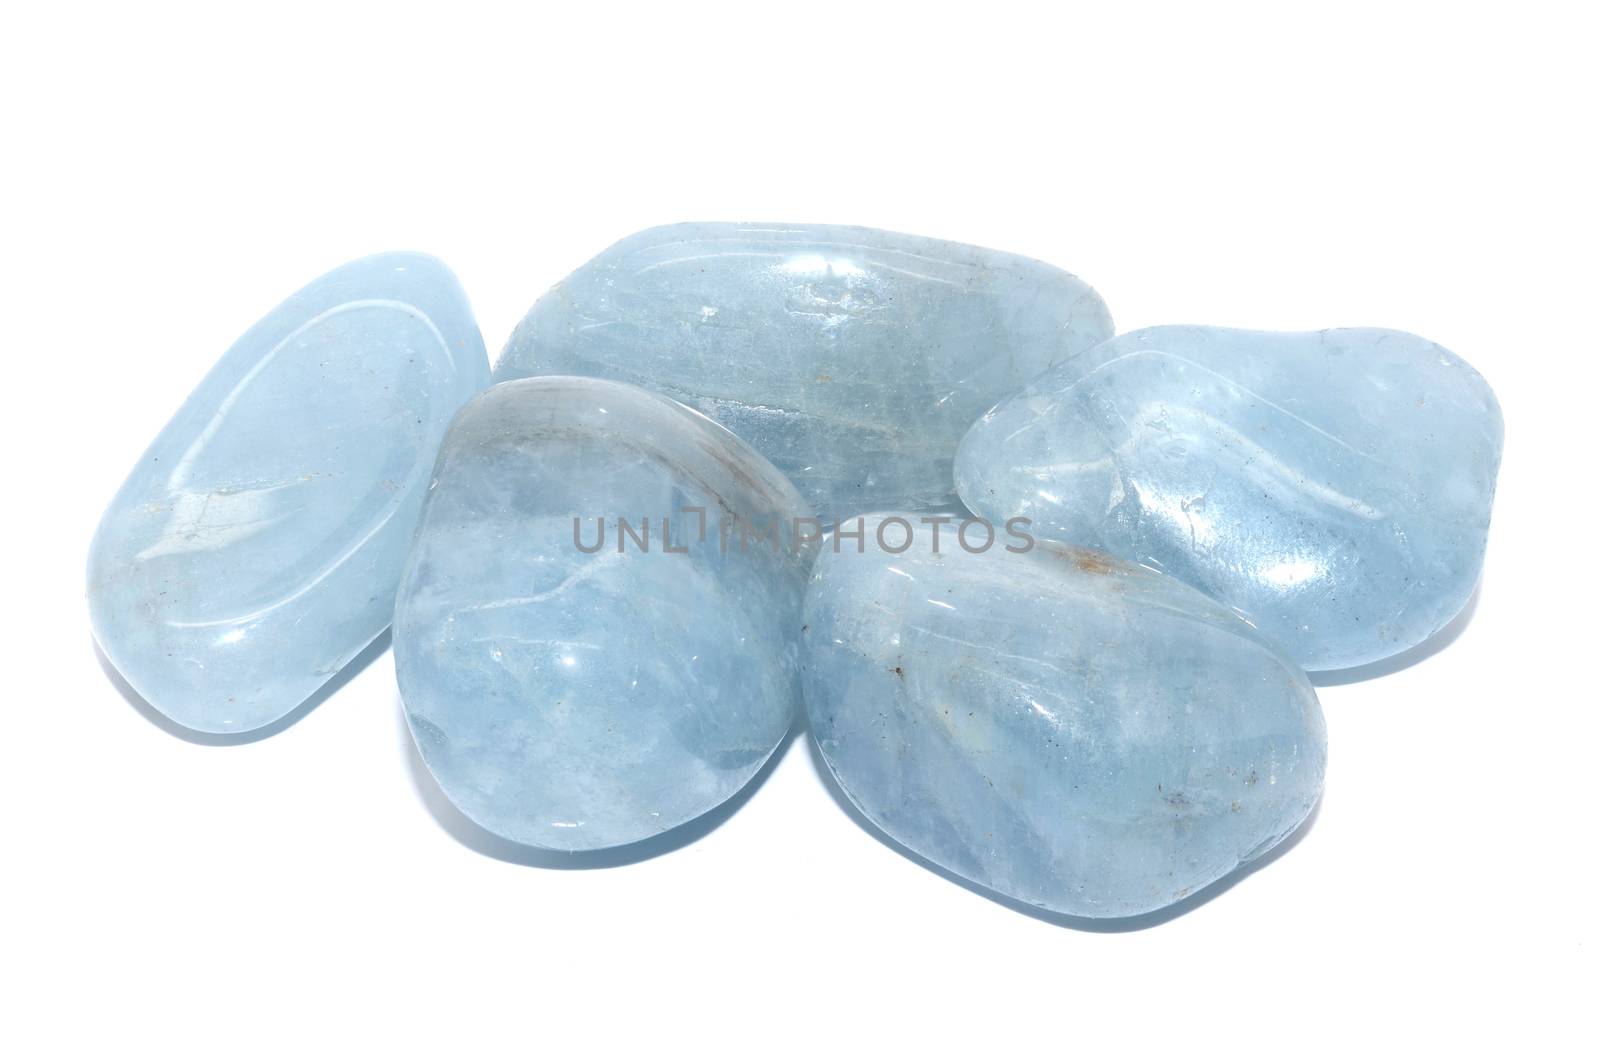 Set of a beautiful tumbled Aquamarine semiprecious stones isolated on white